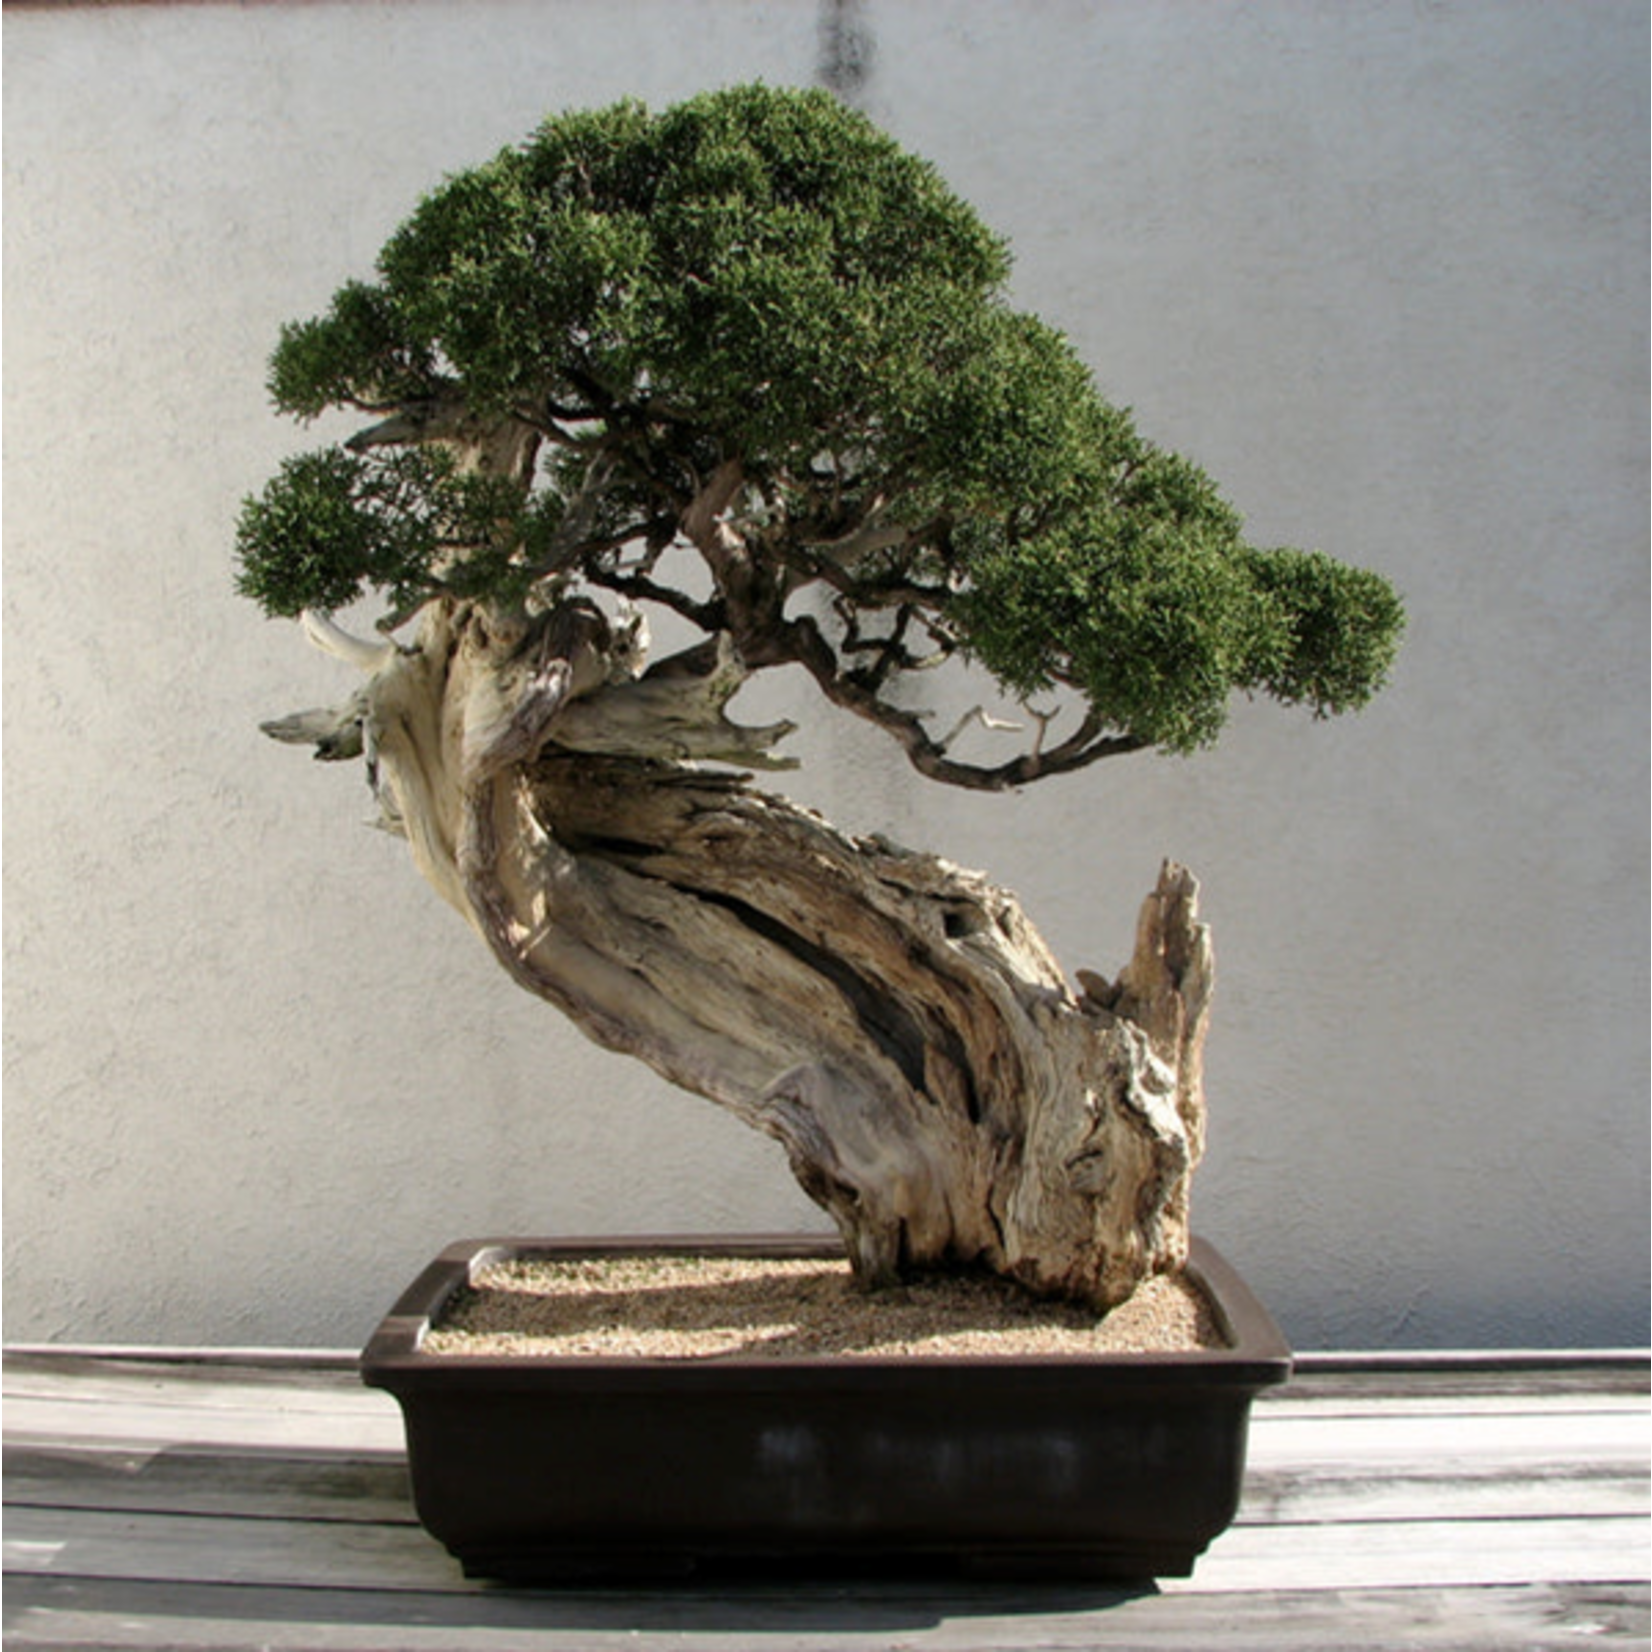 https://cdn.shoplightspeed.com/shops/635376/files/54047883/1652x1652x2/rocky-mountain-juniper-bonsai-tree-seed-grow-kit.jpg